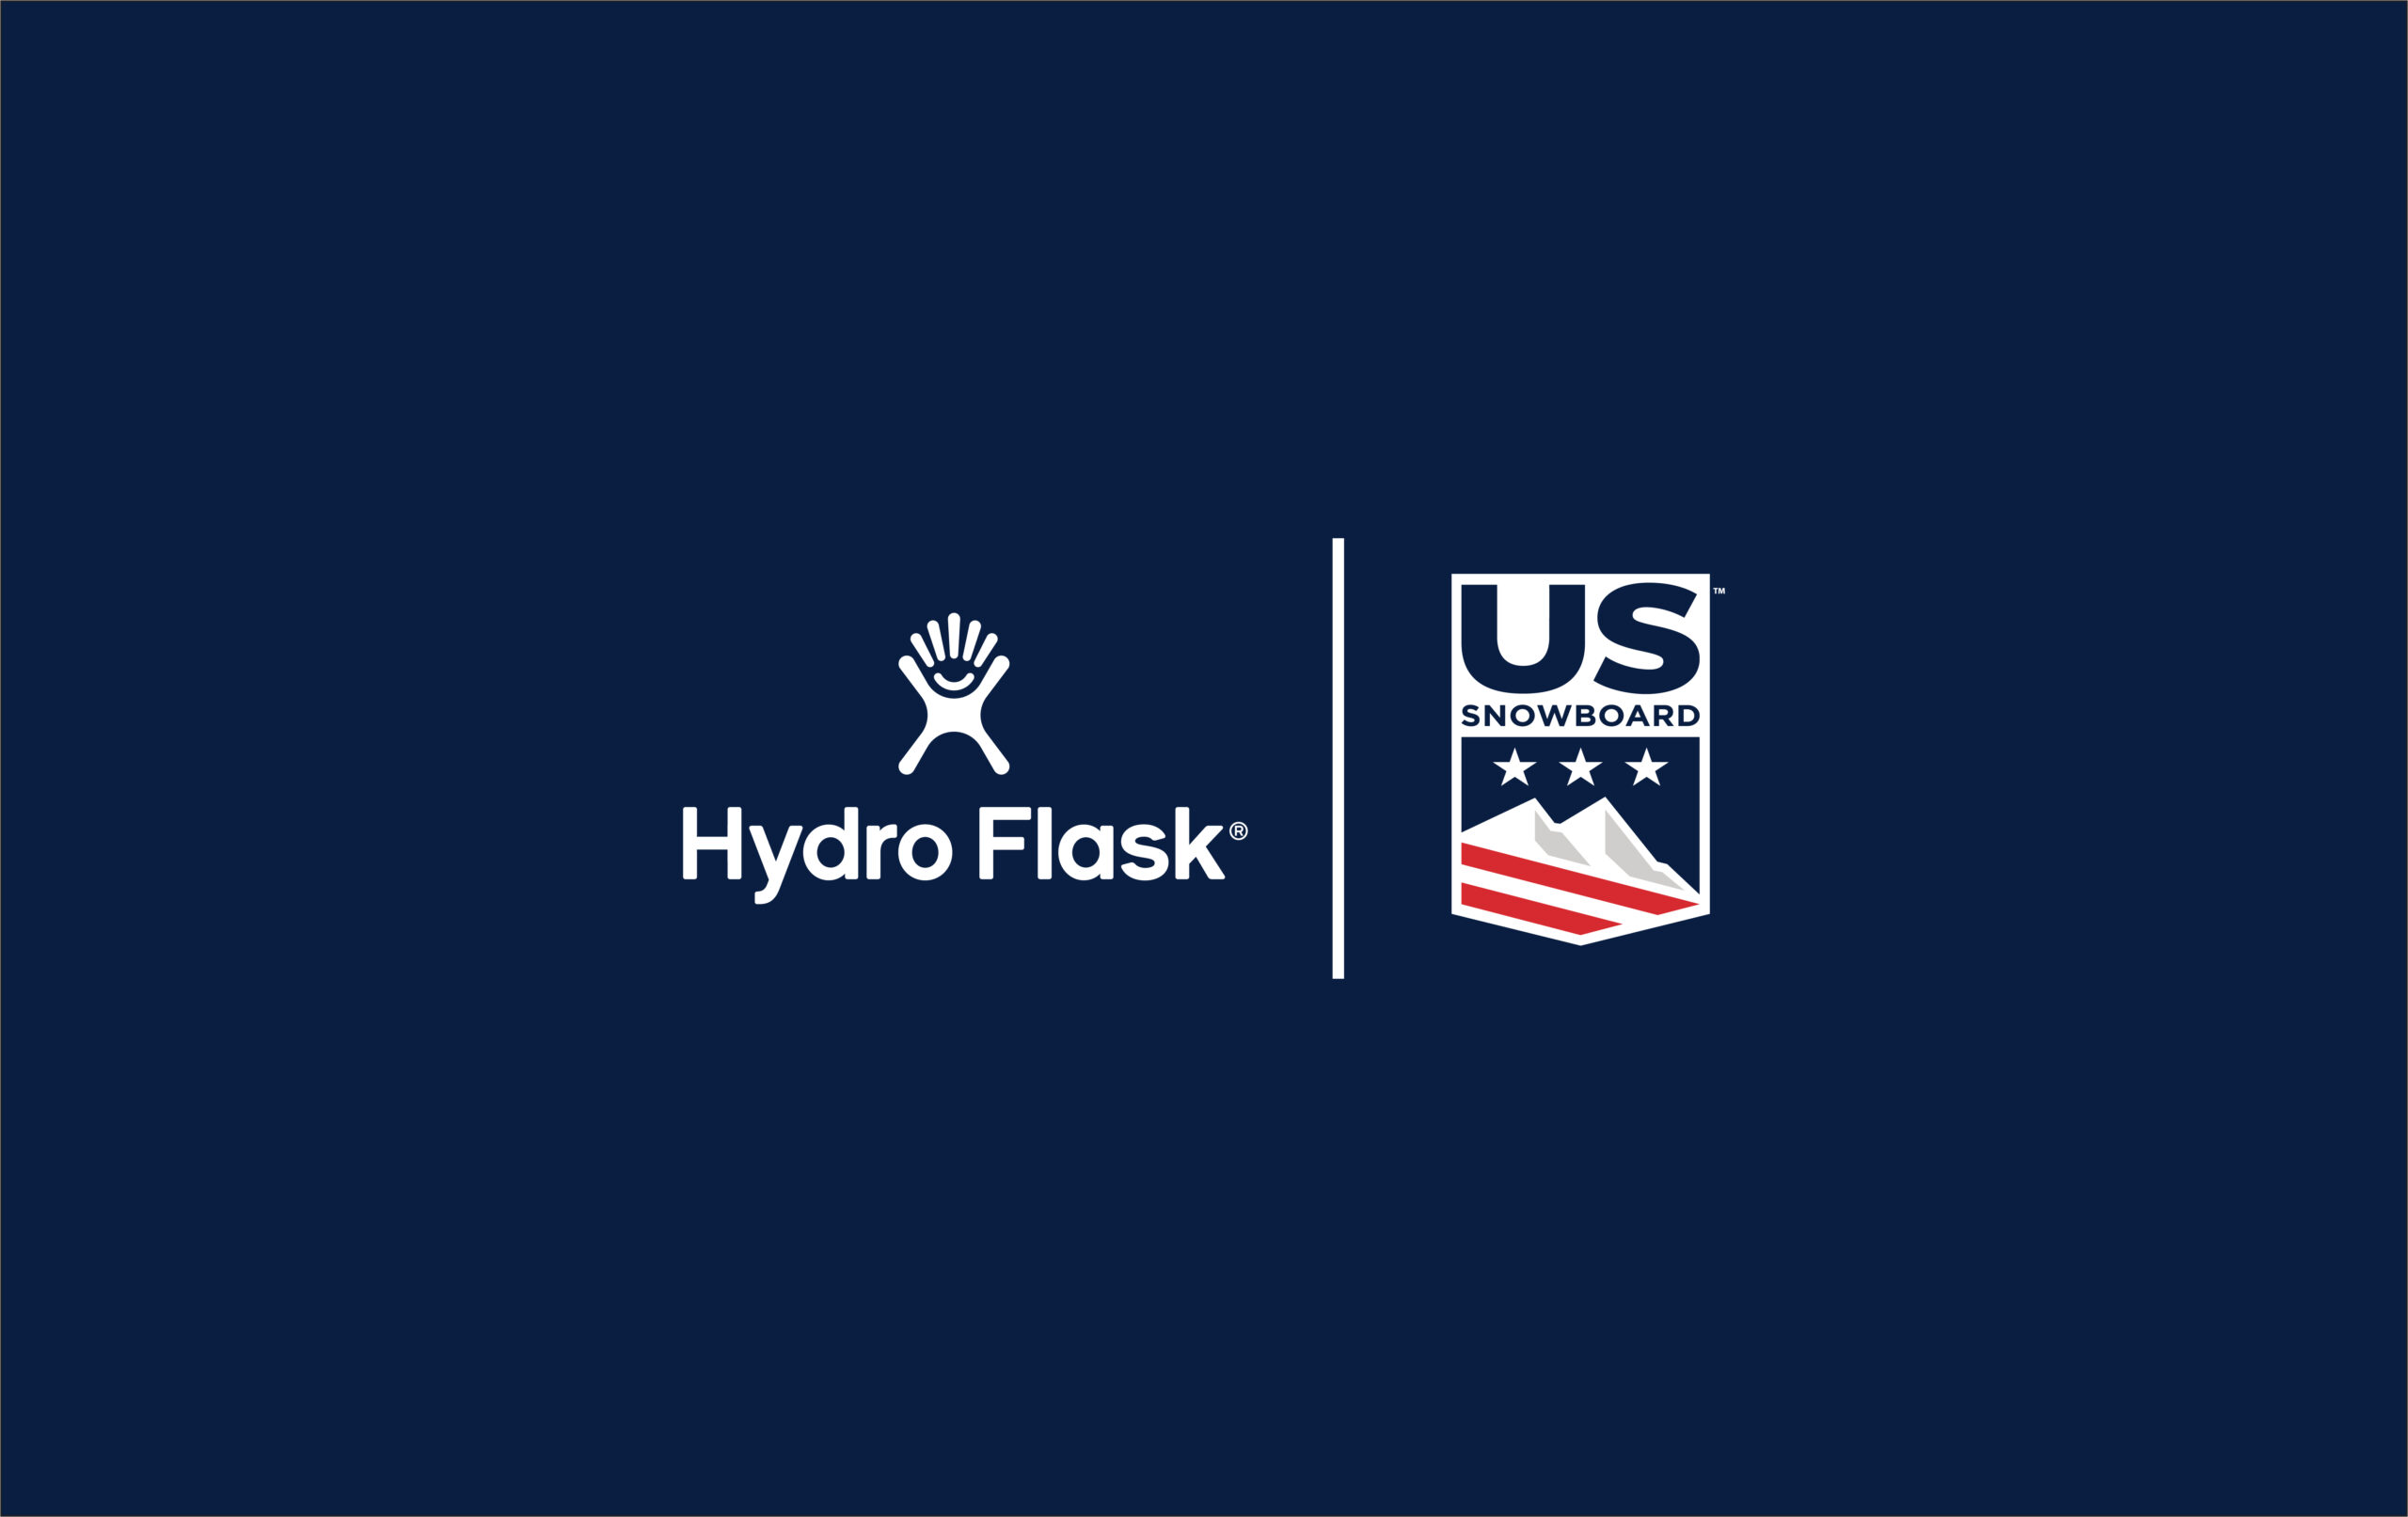 Hydroflask USSnowboard